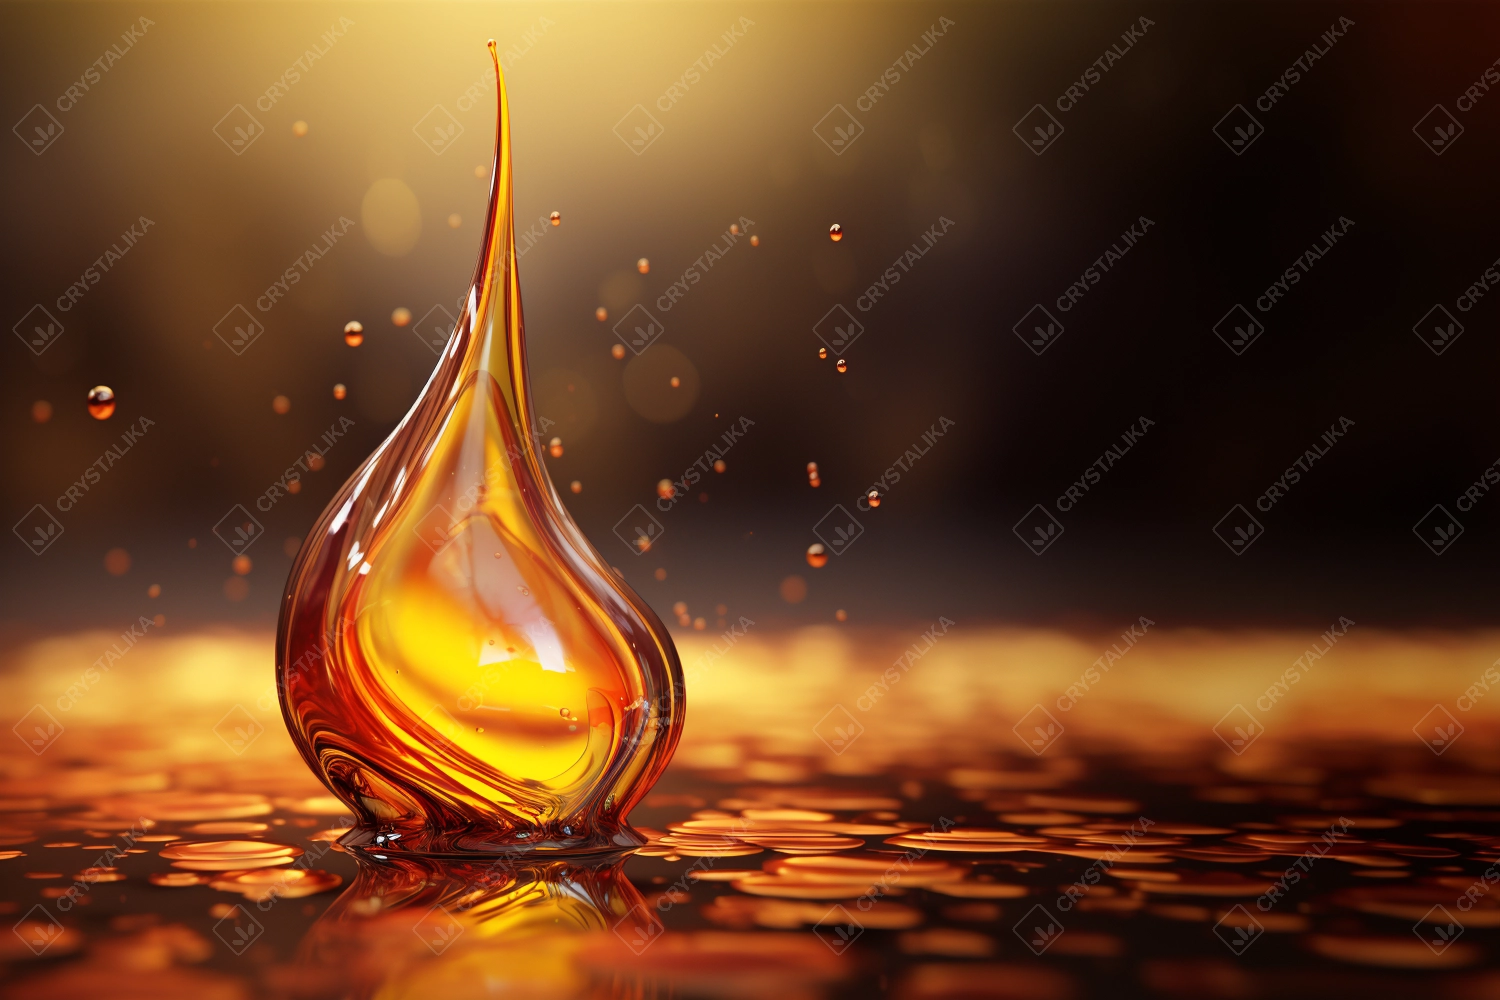 3D illustration of a drop of oil on a golden light background.